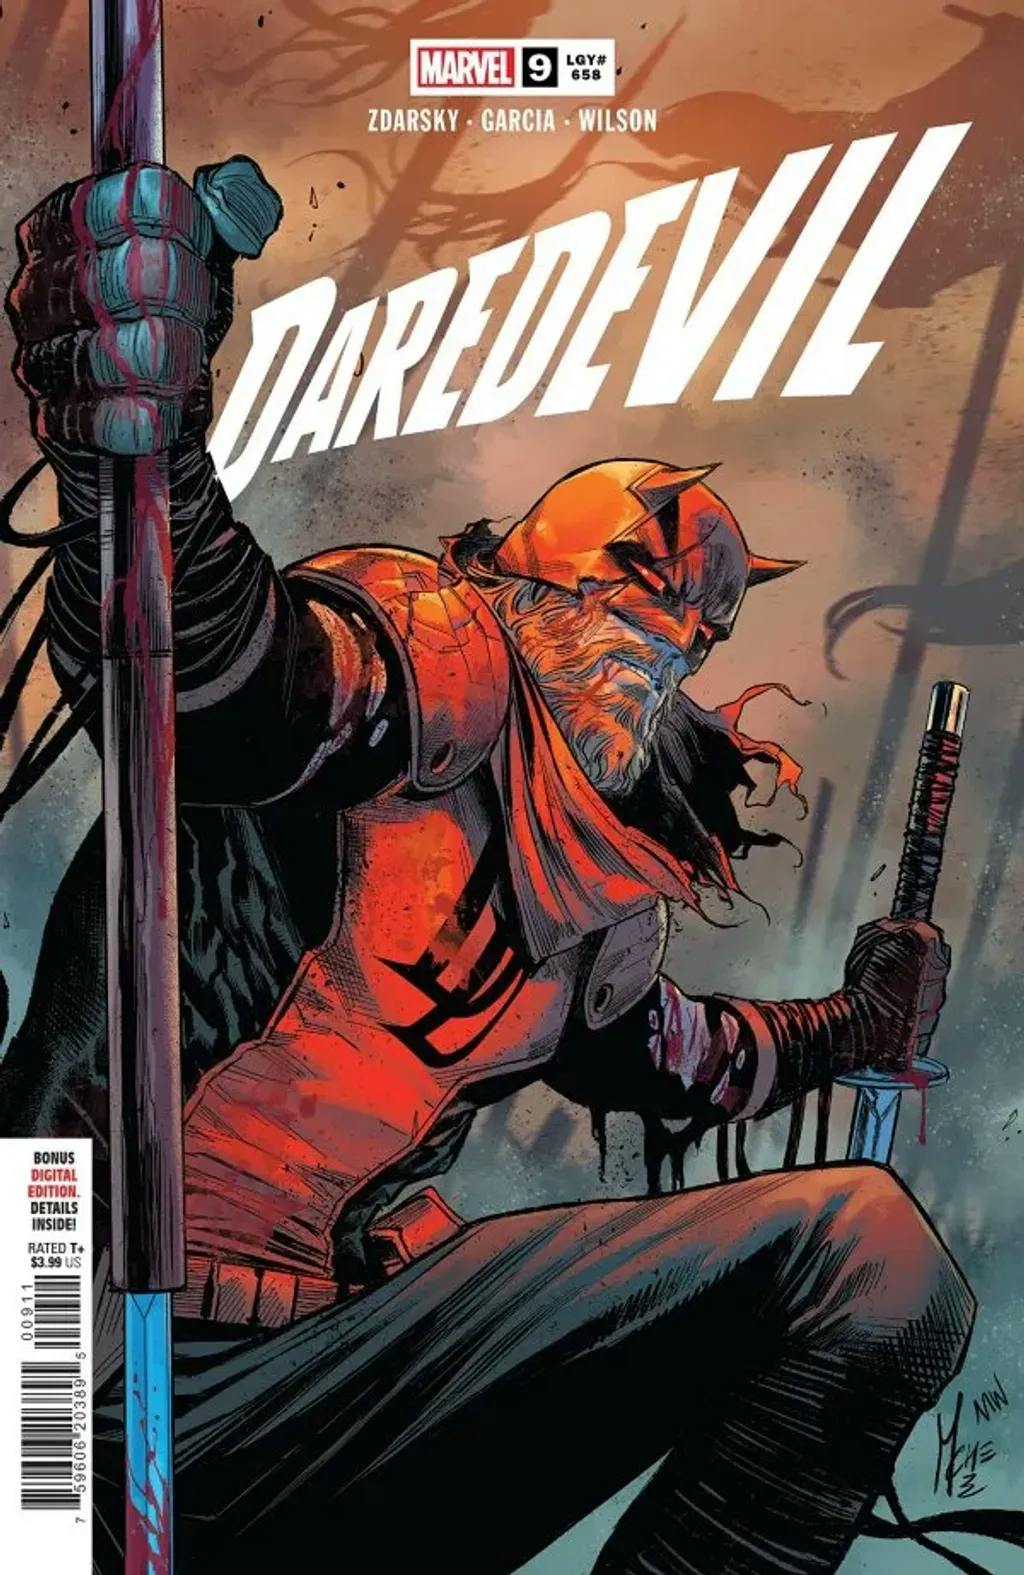 Daredevil #9 by Chip Zdarsky, Manuel Garcia, and Matt Wilson